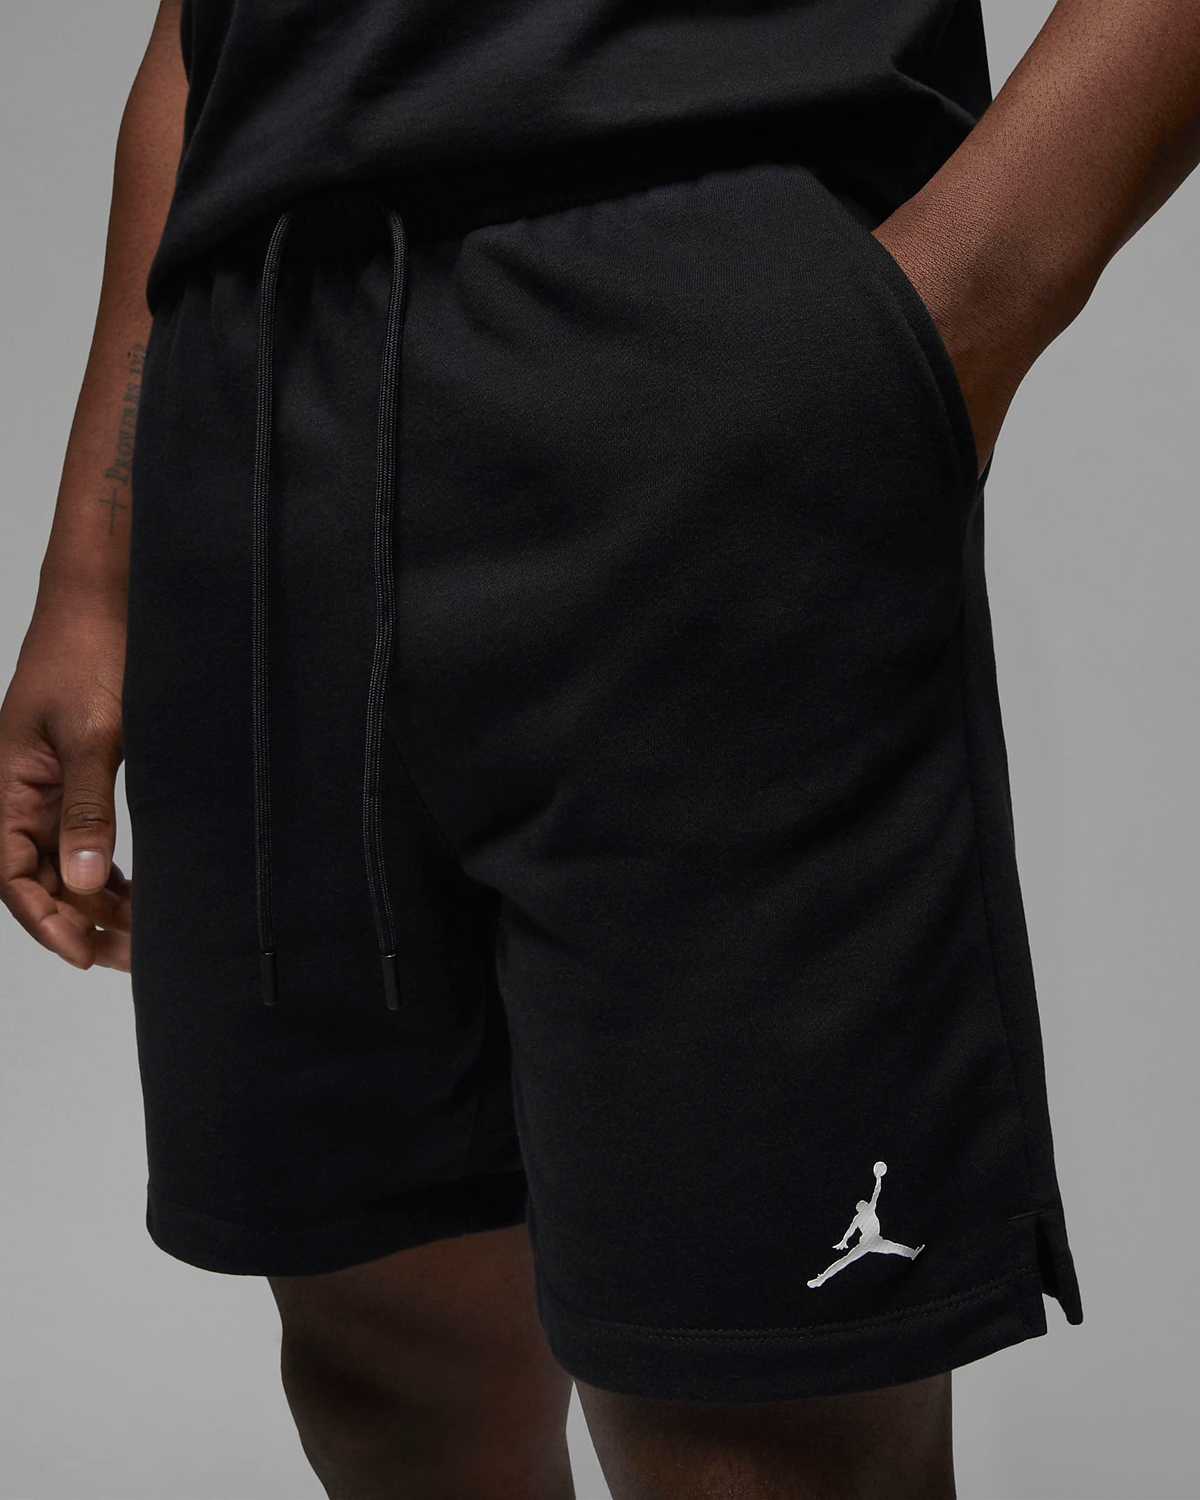 Jordan-Essentials-Shorts-Black-White-Red-2